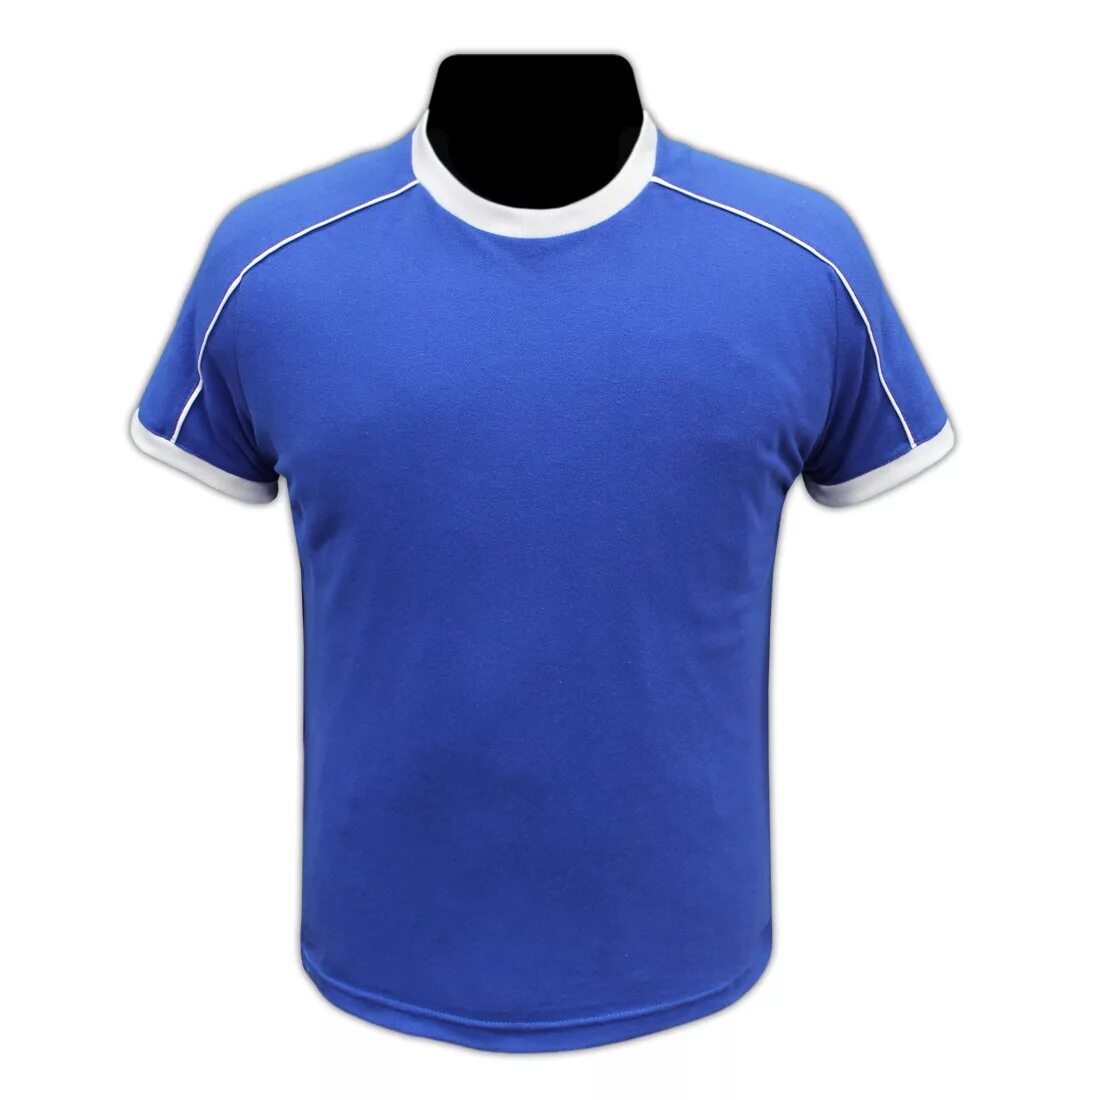 Футбольная майка. Футболка мужская футбольная. Синяя футбольная футболка. Синие футболки для футбола.